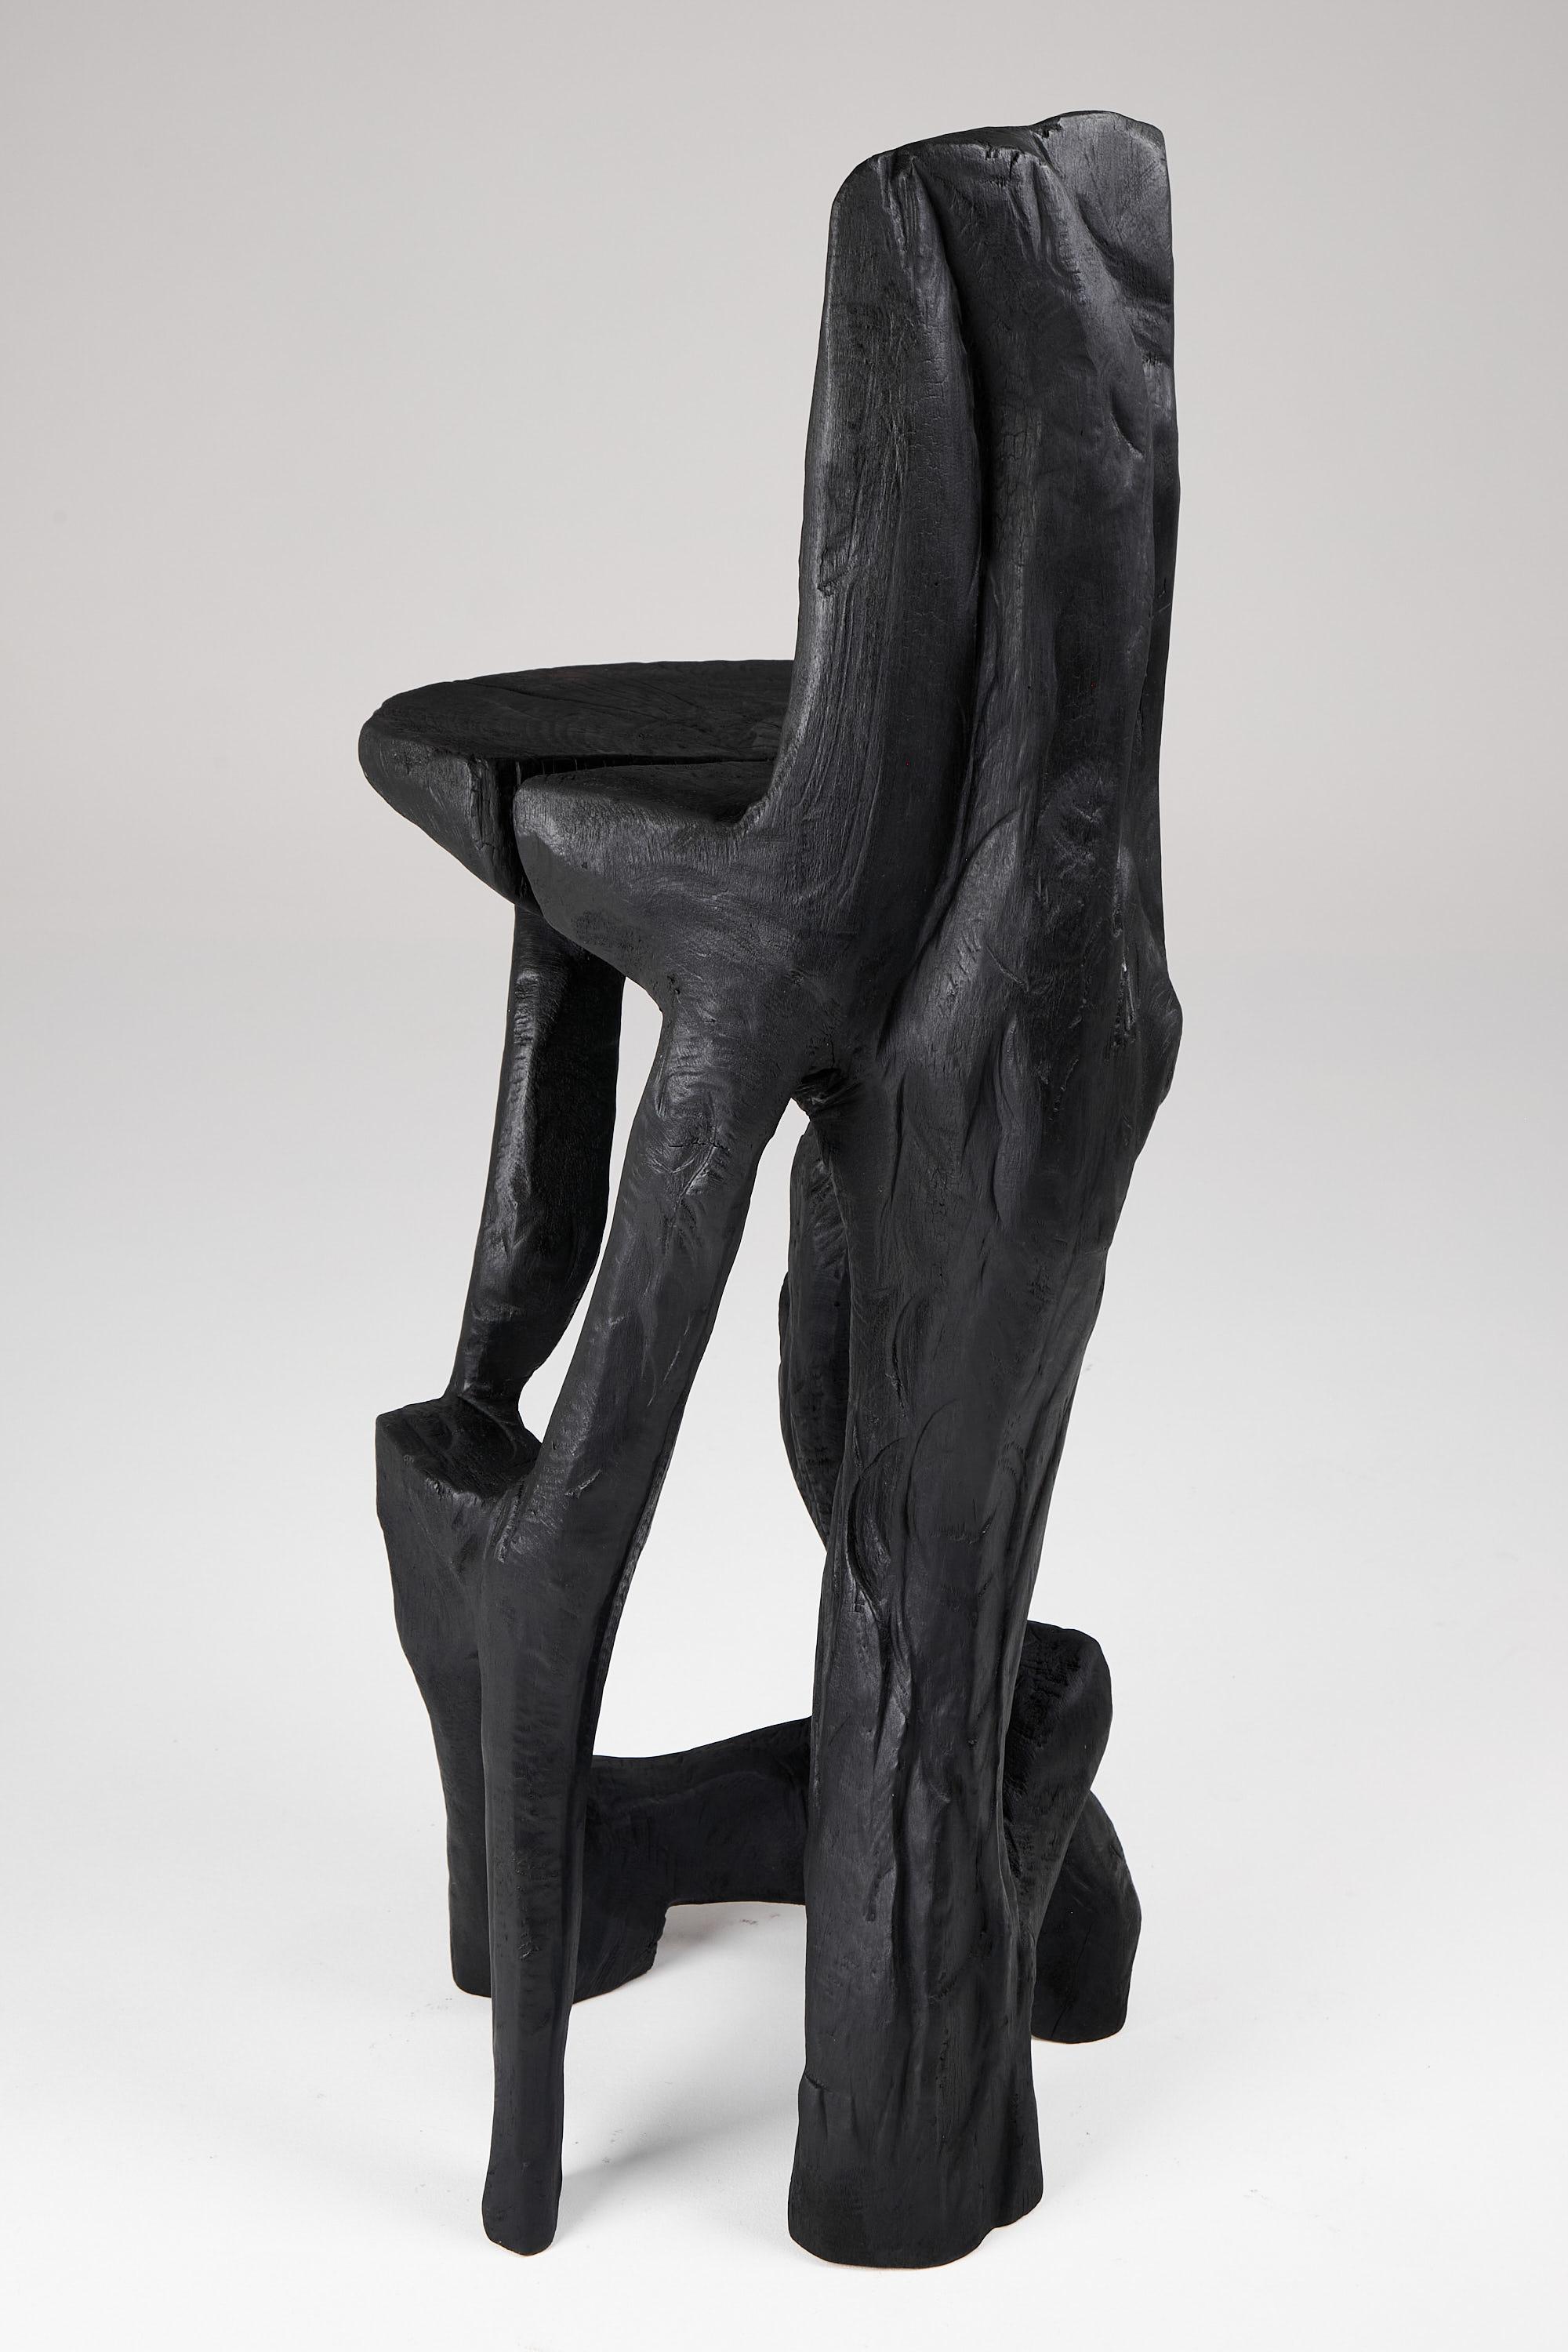 Makha, Solid Wood Sculptural Bar Chair, Original Contemporary Design, Logniture For Sale 8